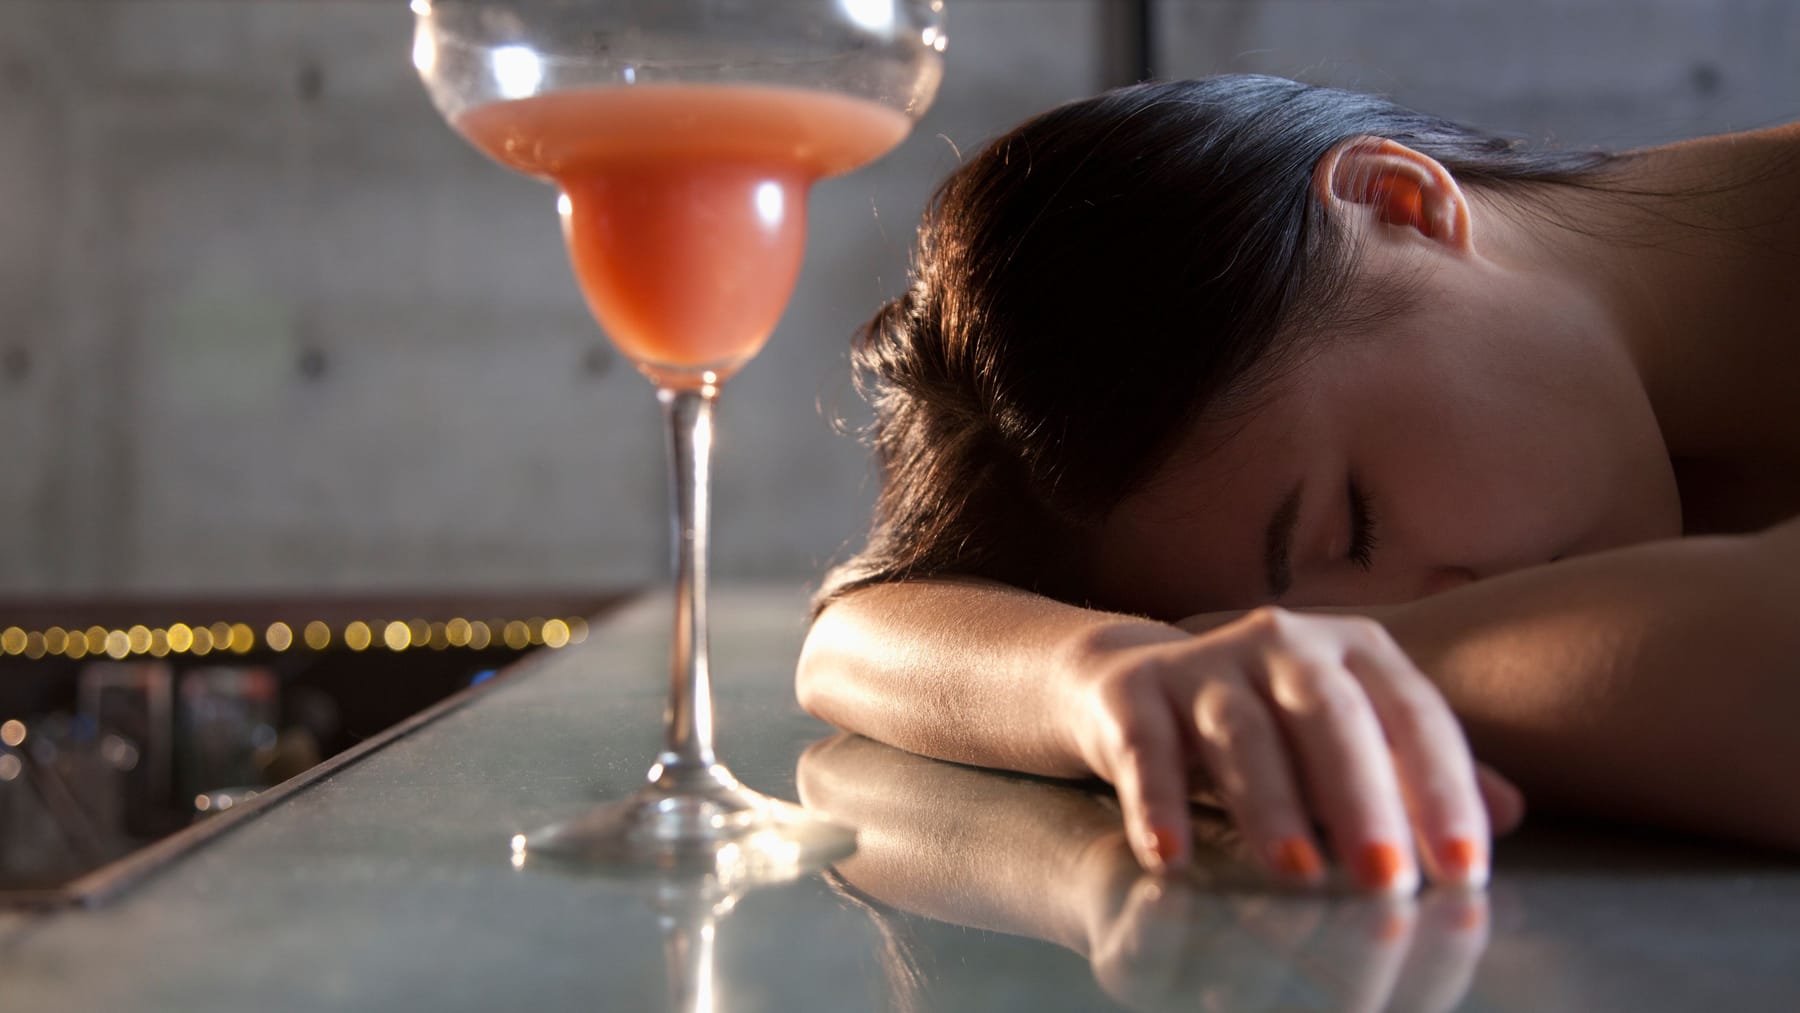 Frau hatte 5,2 Promille Alkohol im Blut: Promillewert sprengte Alkotest